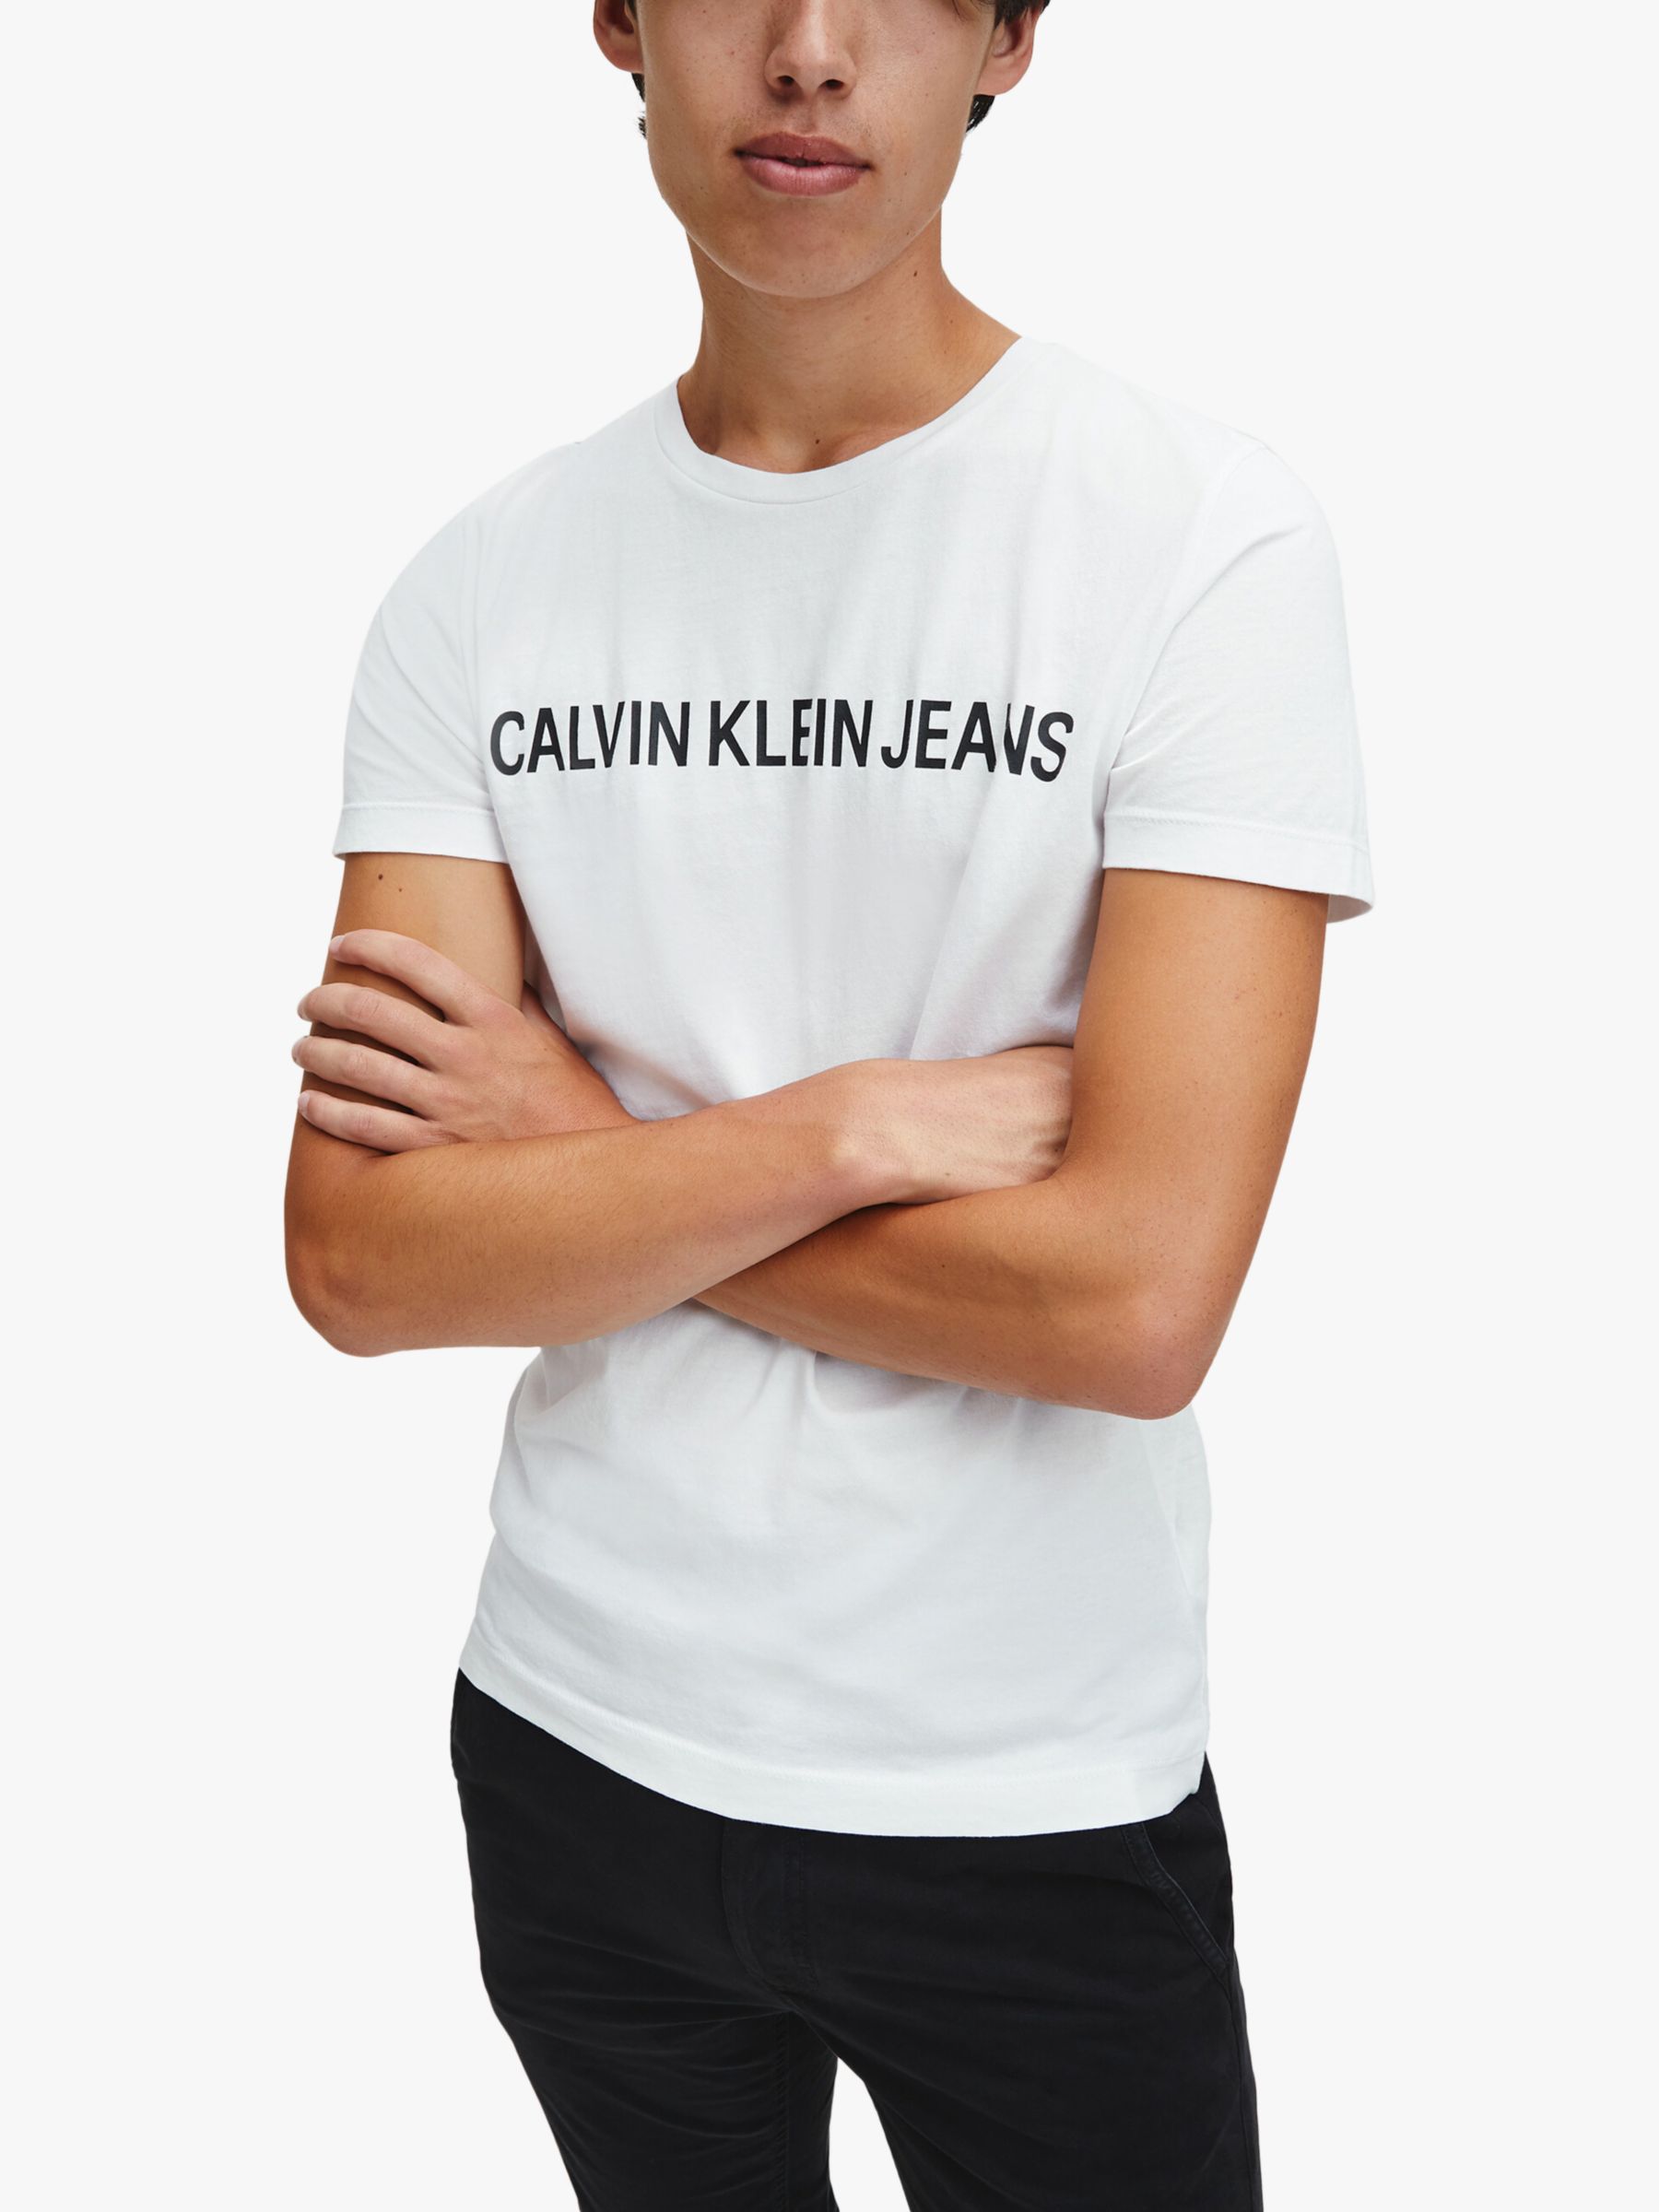 XS Men's T Shirts | John Lewis  Partners